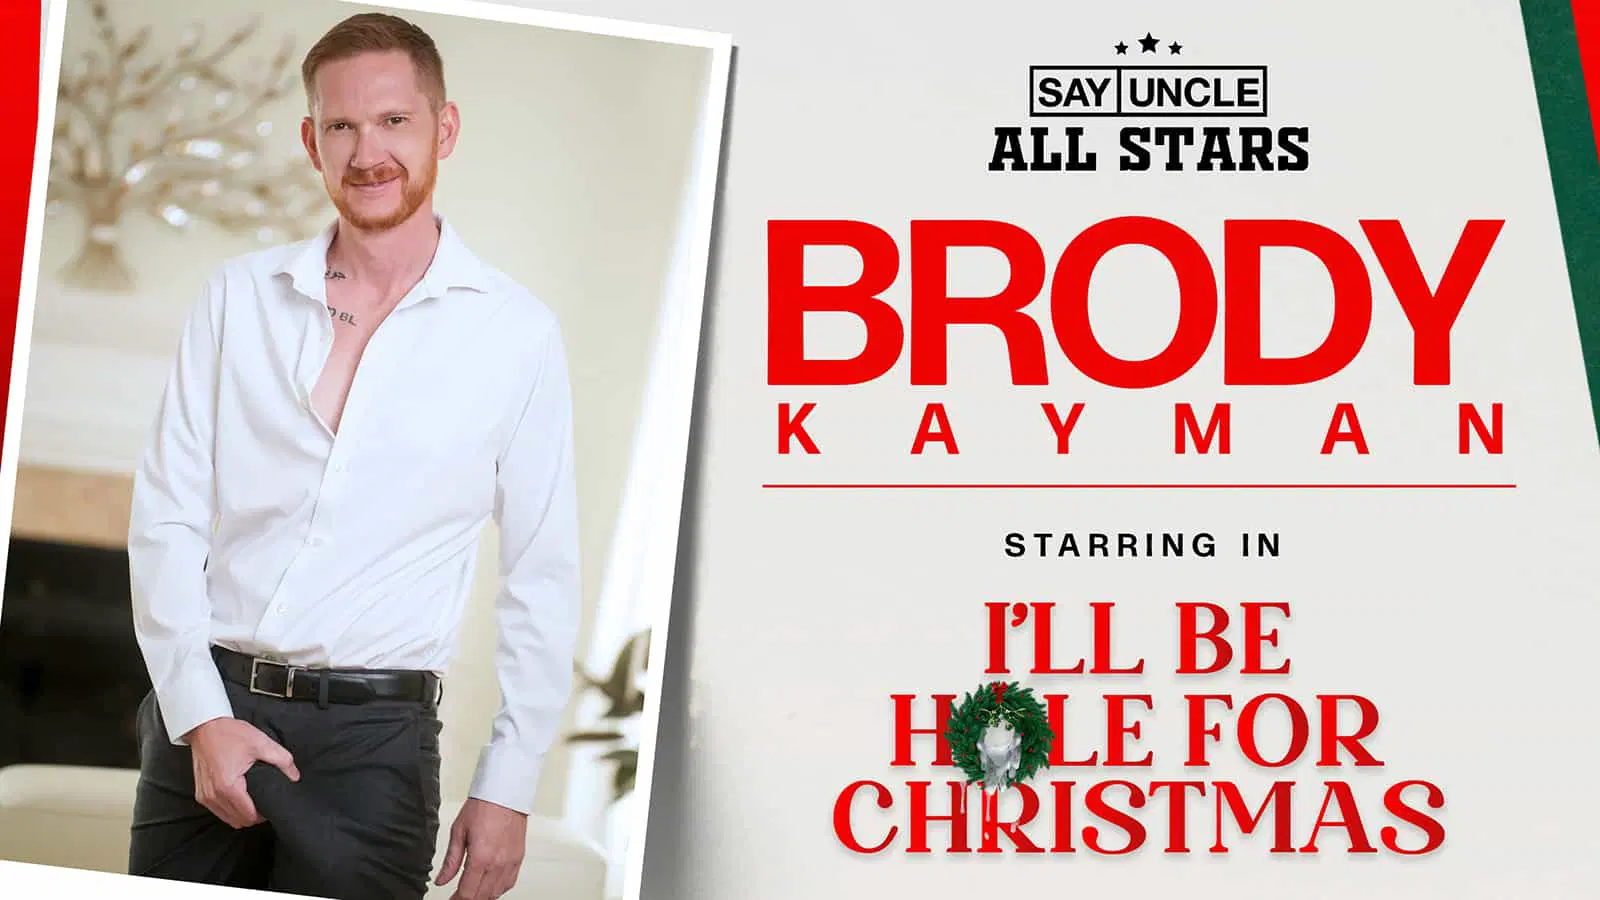 I’ll be Hole for Christmas, Part 5 – Brody Kayman, Adrian Duval, Jaycob Eloisee and Dakota Lovell